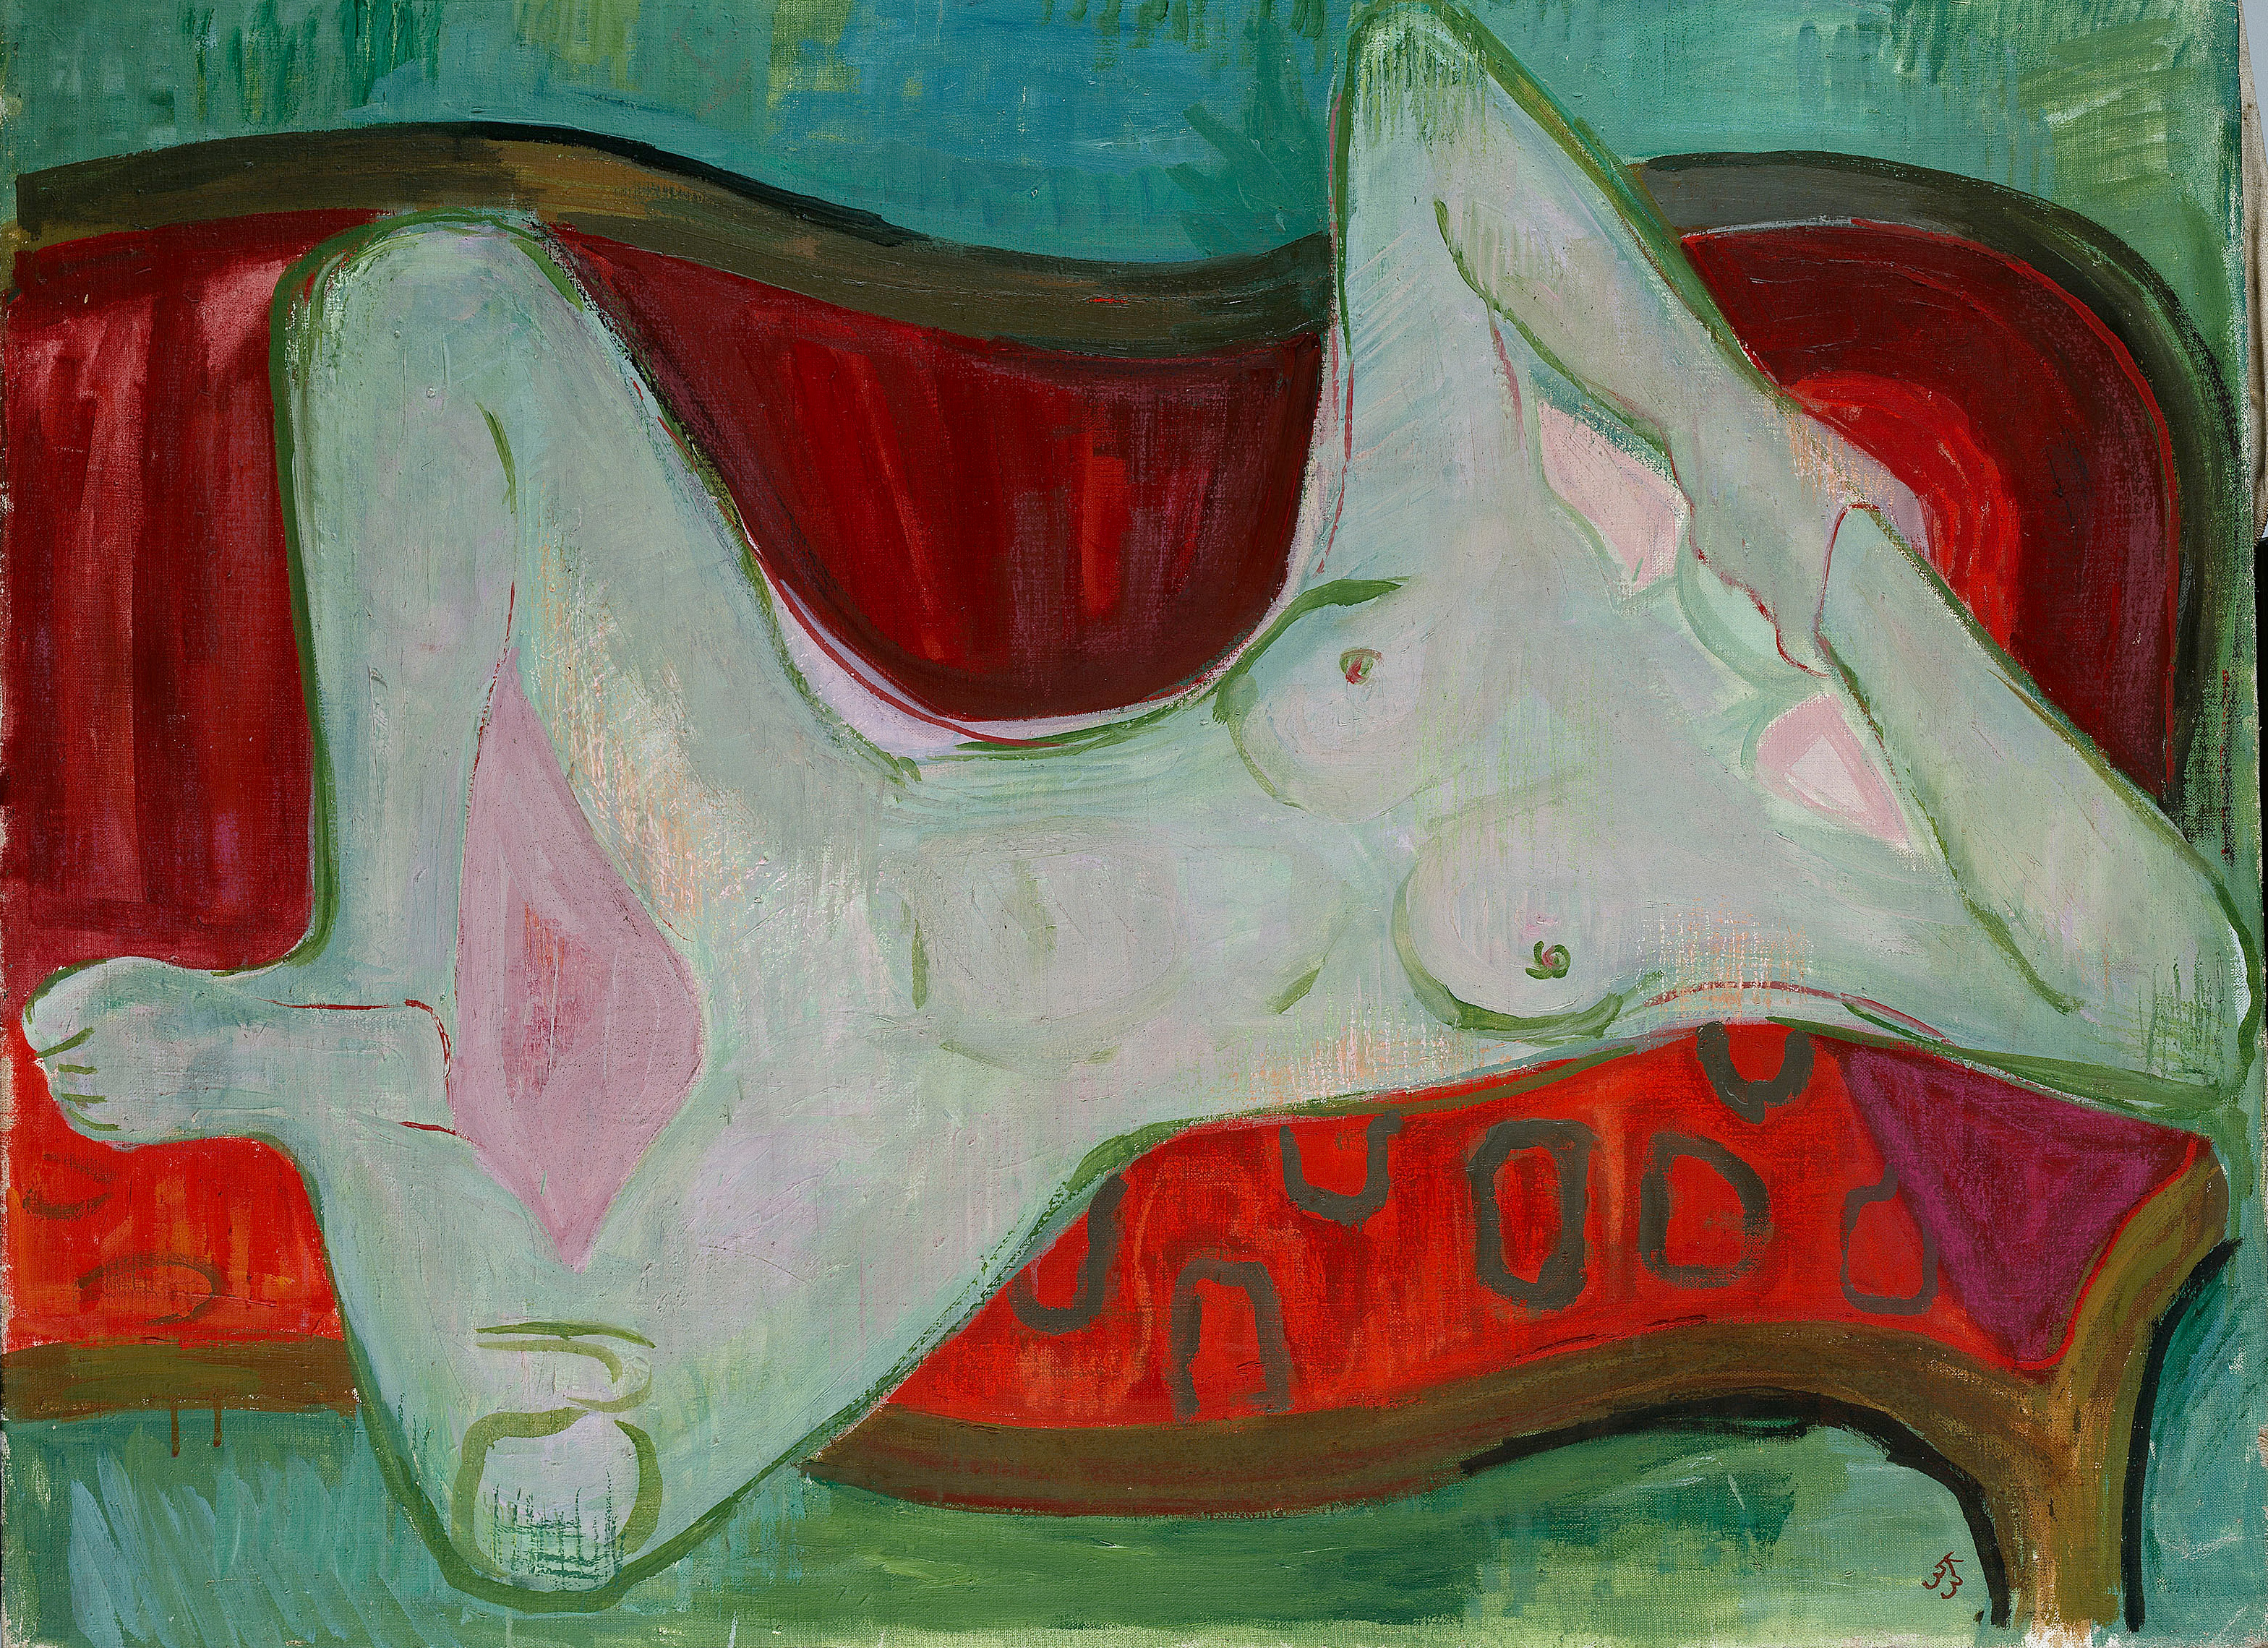 Karl Kluth (1898-1972), Akt auf rotem Sofa, 1933, Öl auf Leinwand, 75,2 x 100,6 cm, © Hamburger Kunsthalle